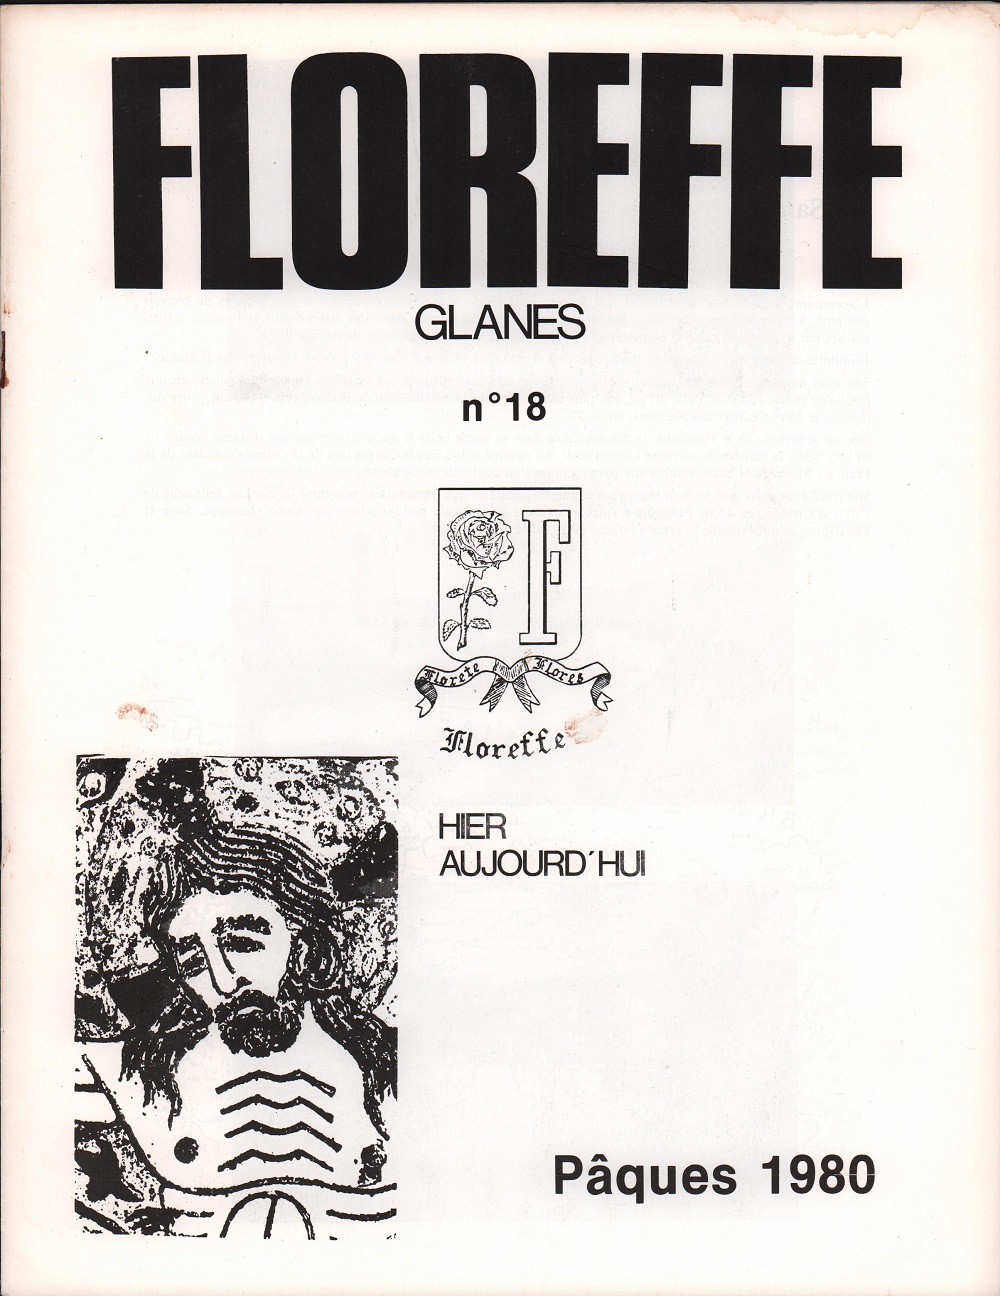 Glanes – n°18 (Pâques 1980)